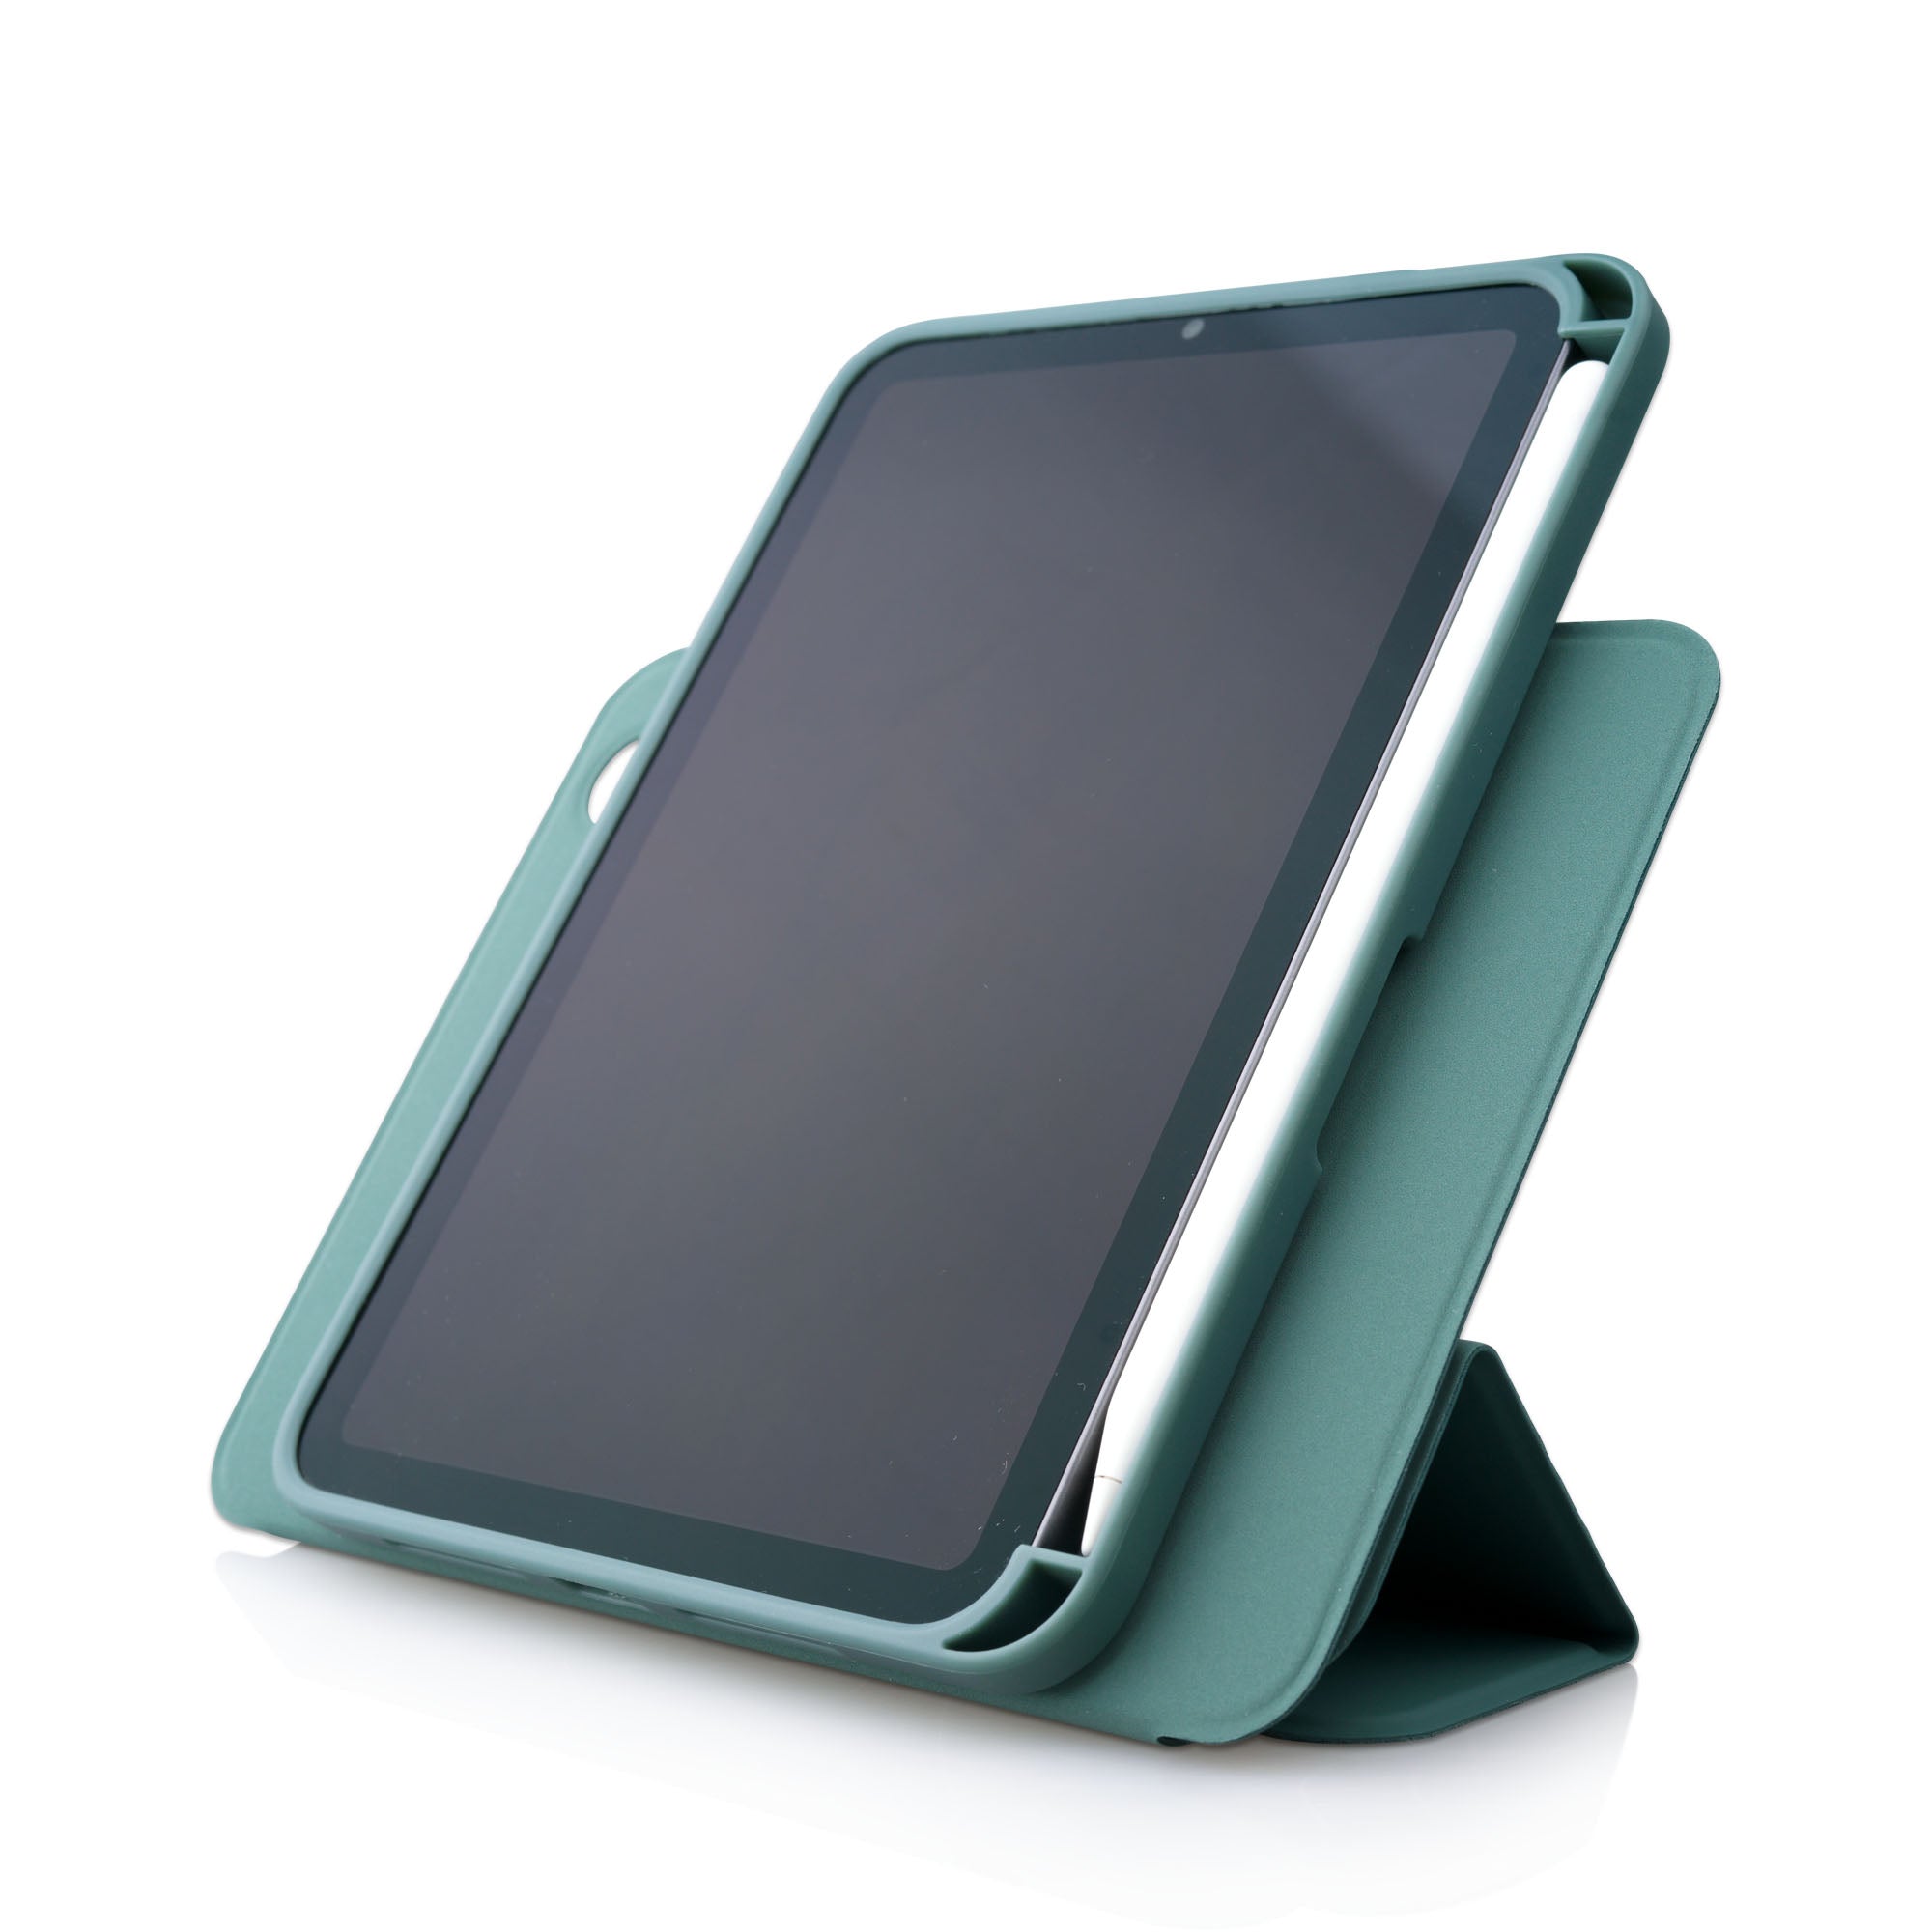 Lanhorse New iPad mini 6 case 8.3inch 2021 release, landscape and portrait viewing standing case.